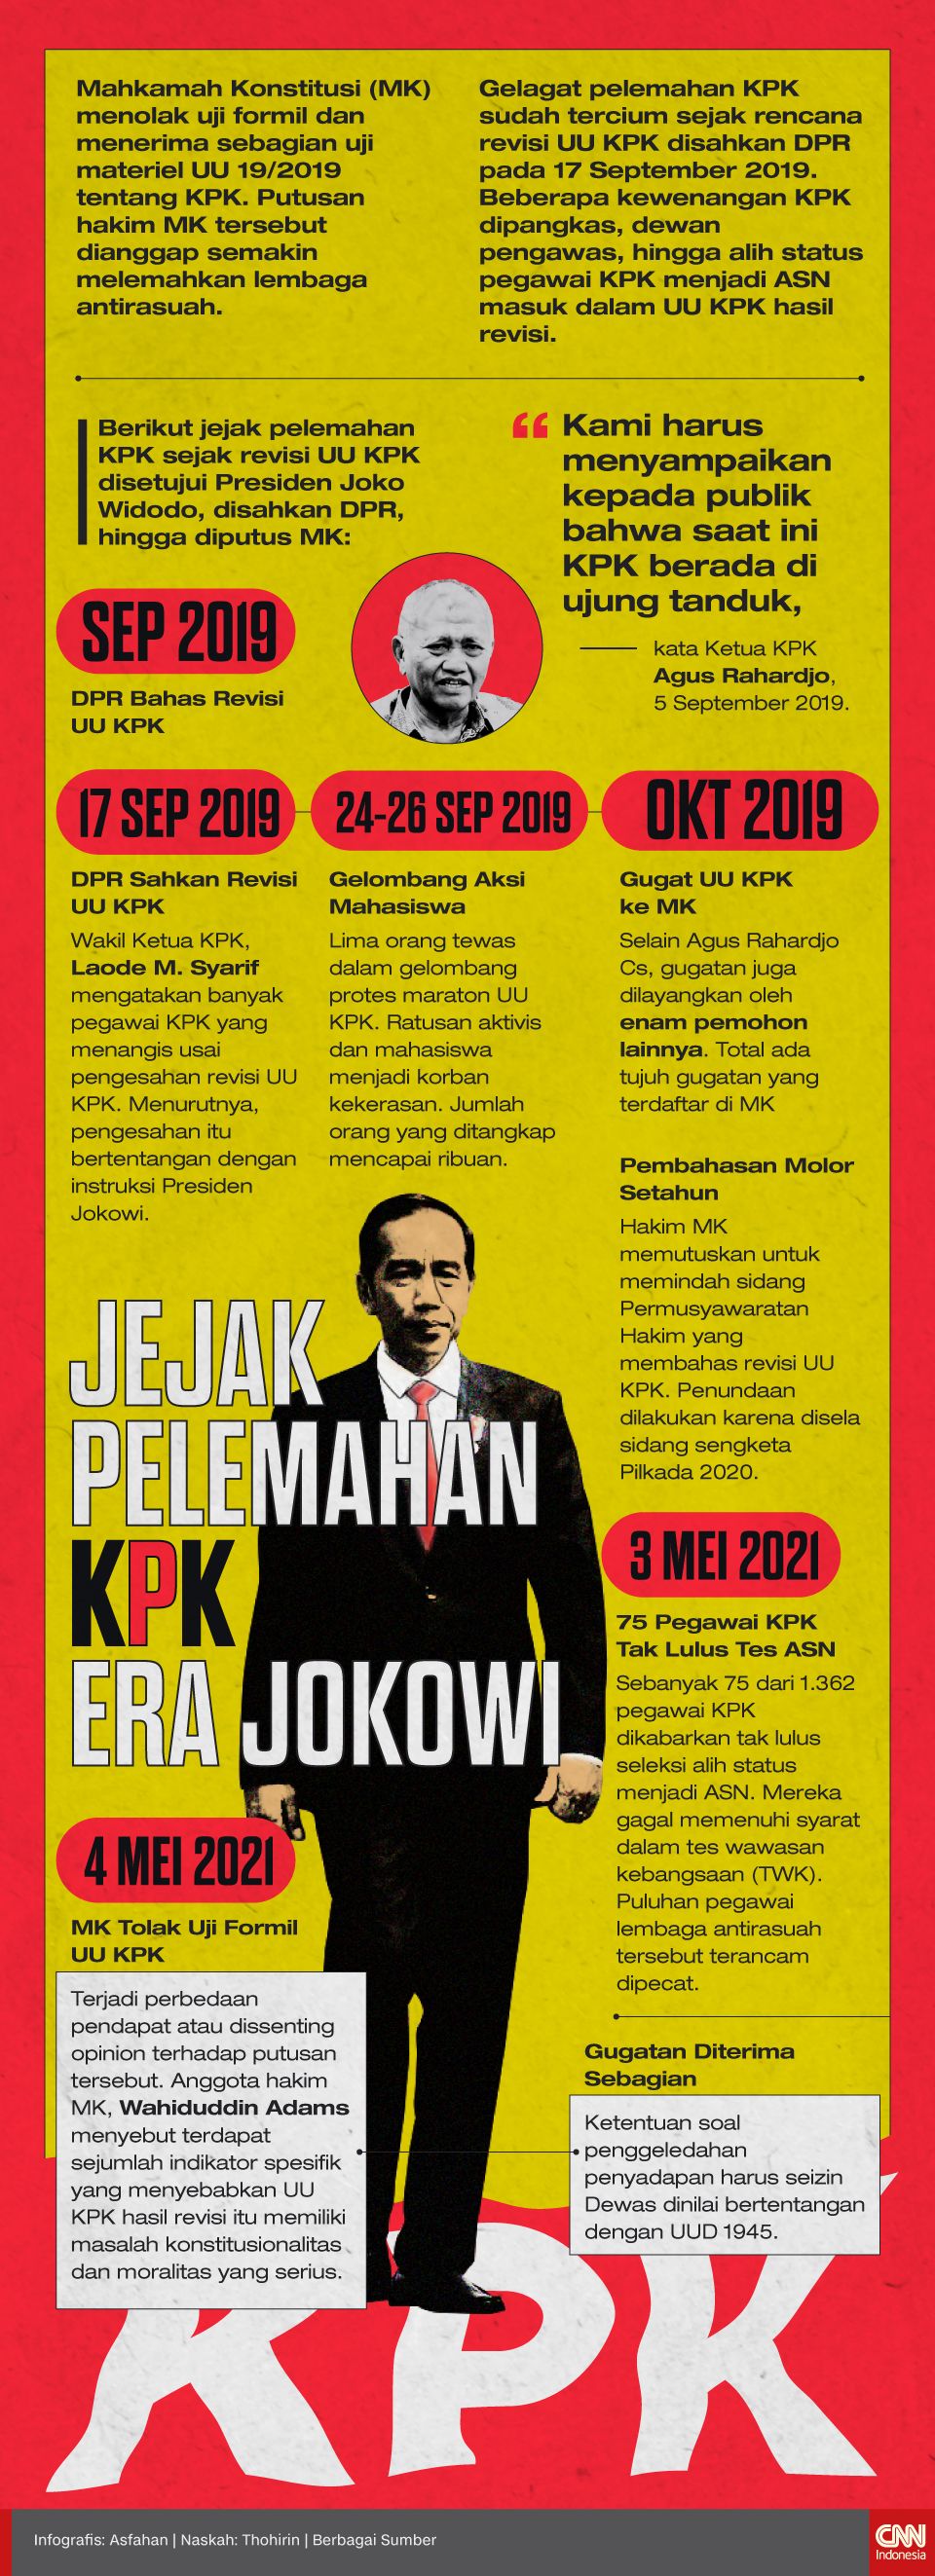 Infografis Jejak Pelemahan KPK Era Jokowi